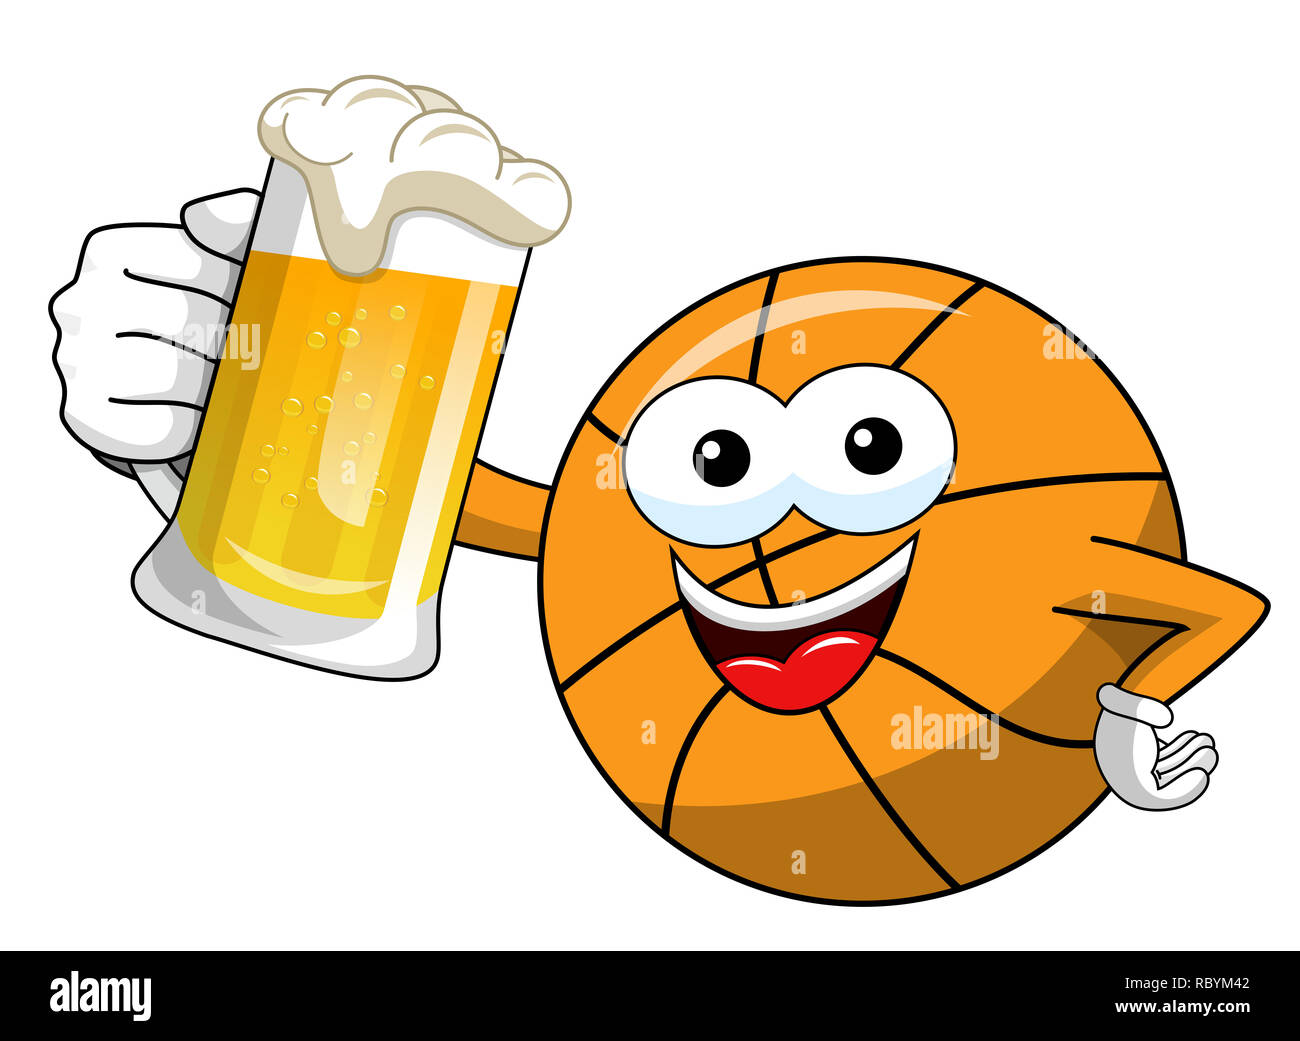 basketball ball cartoon funny character mug beer celebration isolated on  white Stock Photo - Alamy